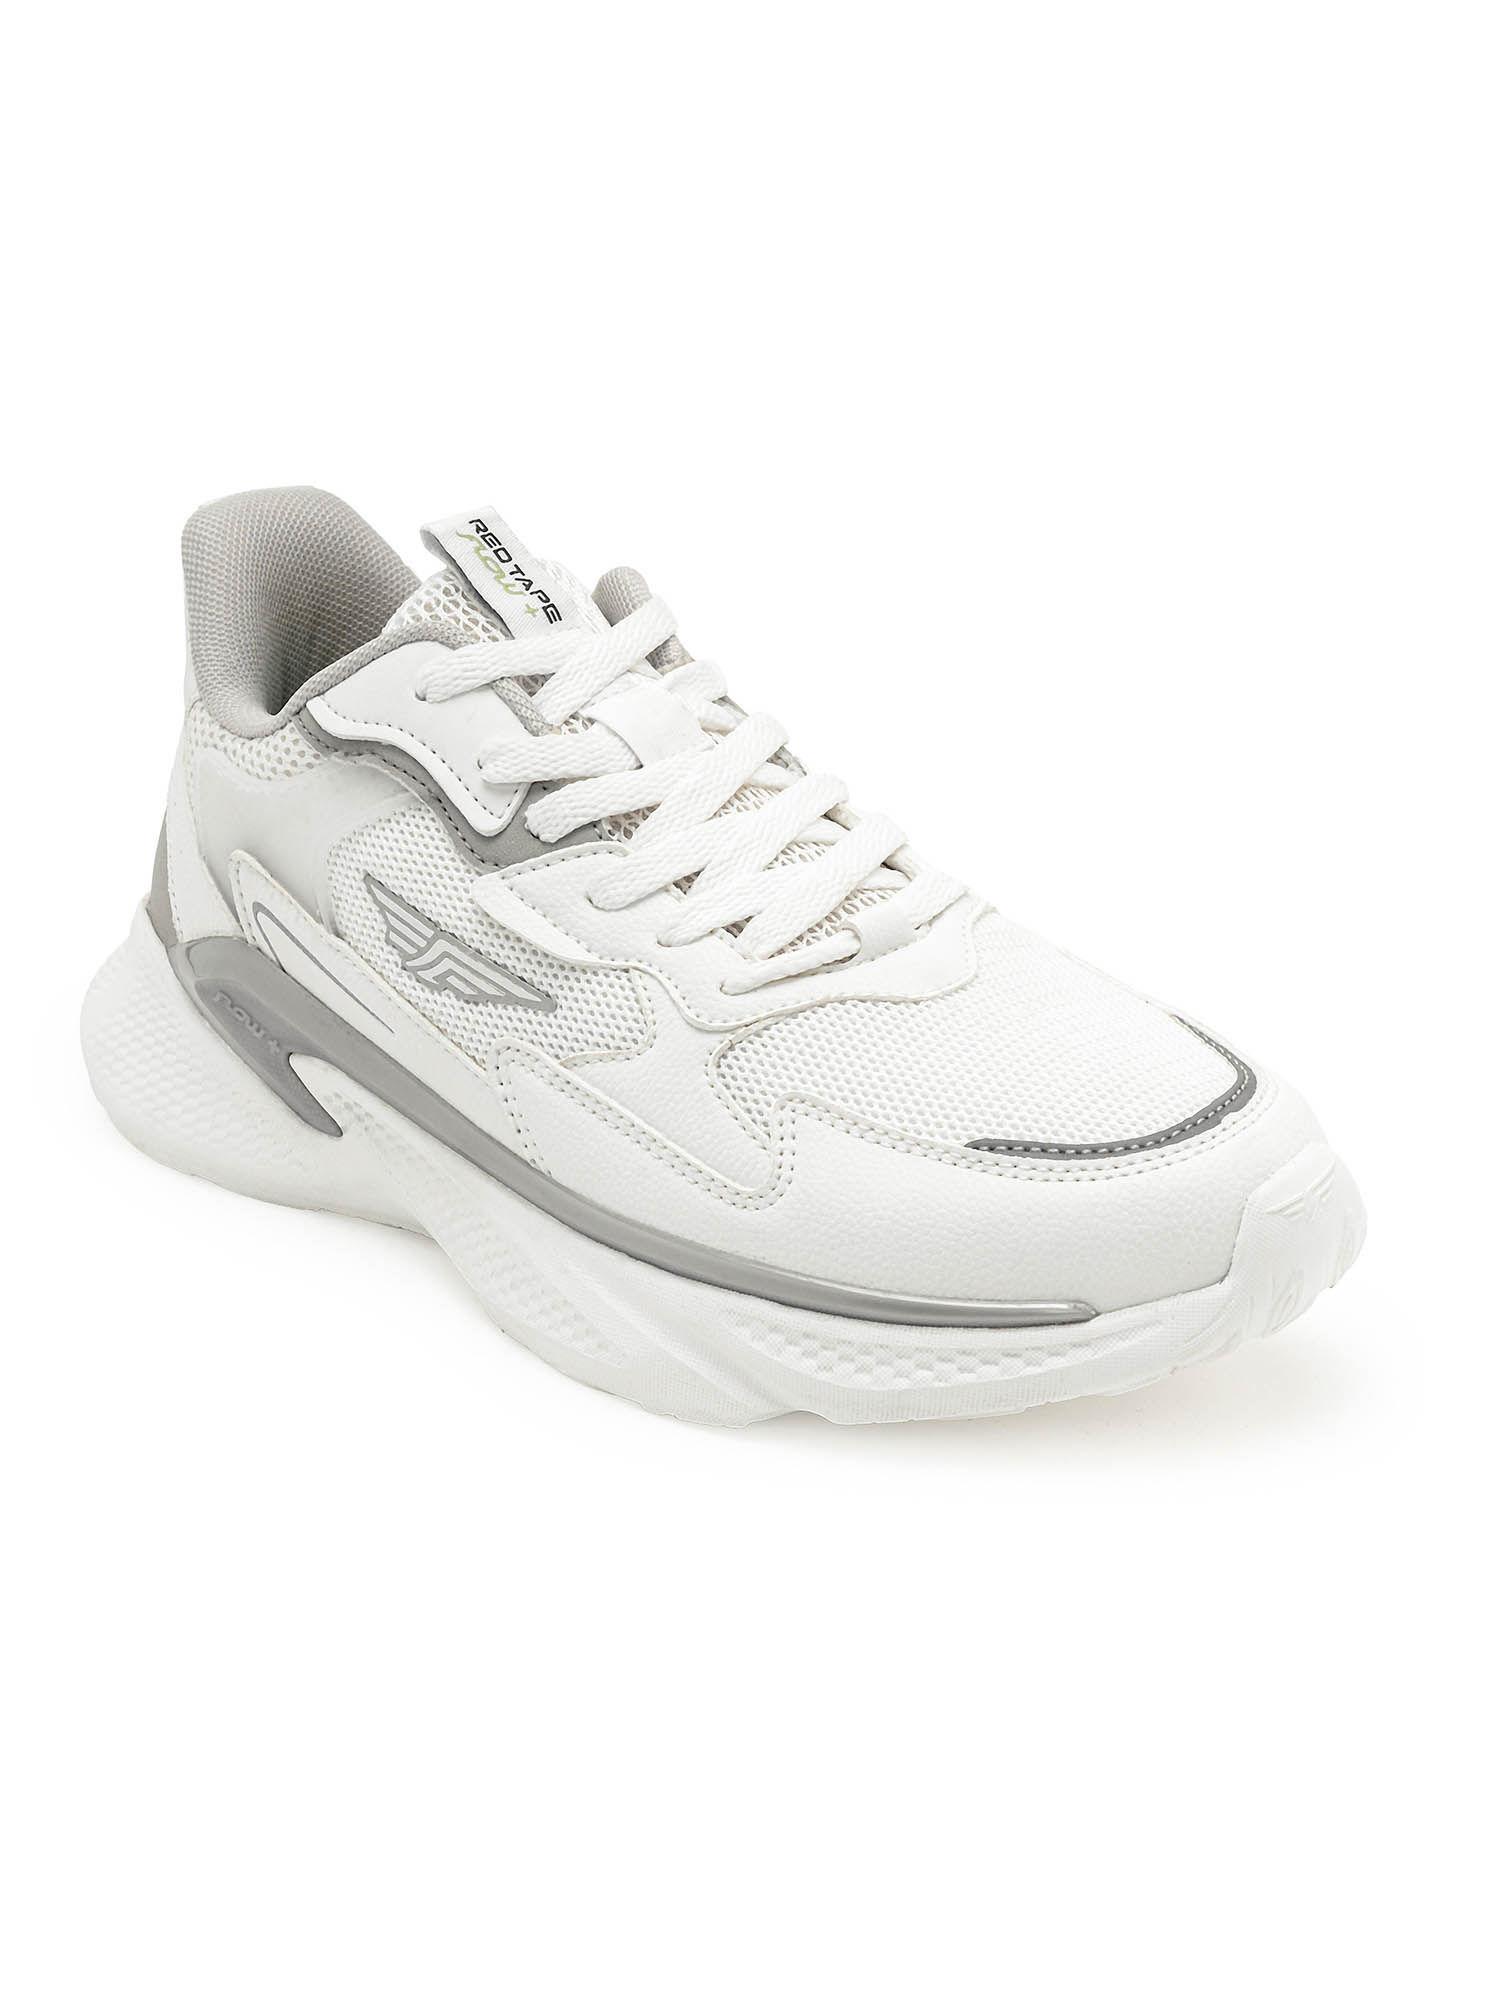 mens textured white-grey walking shoes